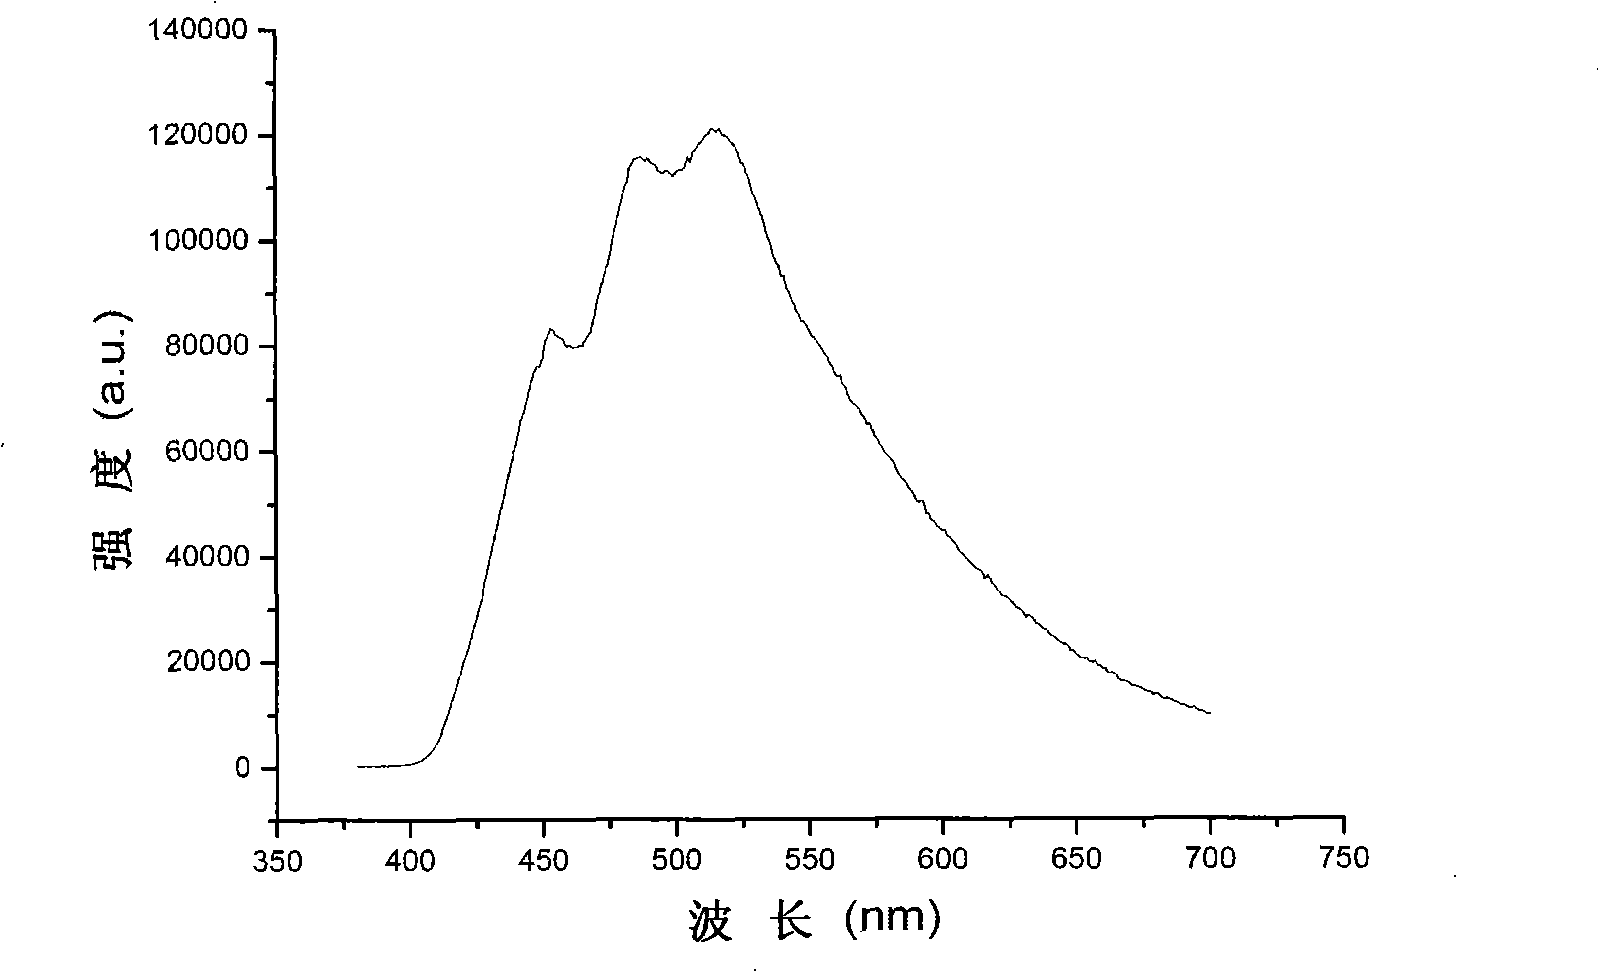 Method for preparing beta, beta'-binary (4-pyridyl) divinylbenzene